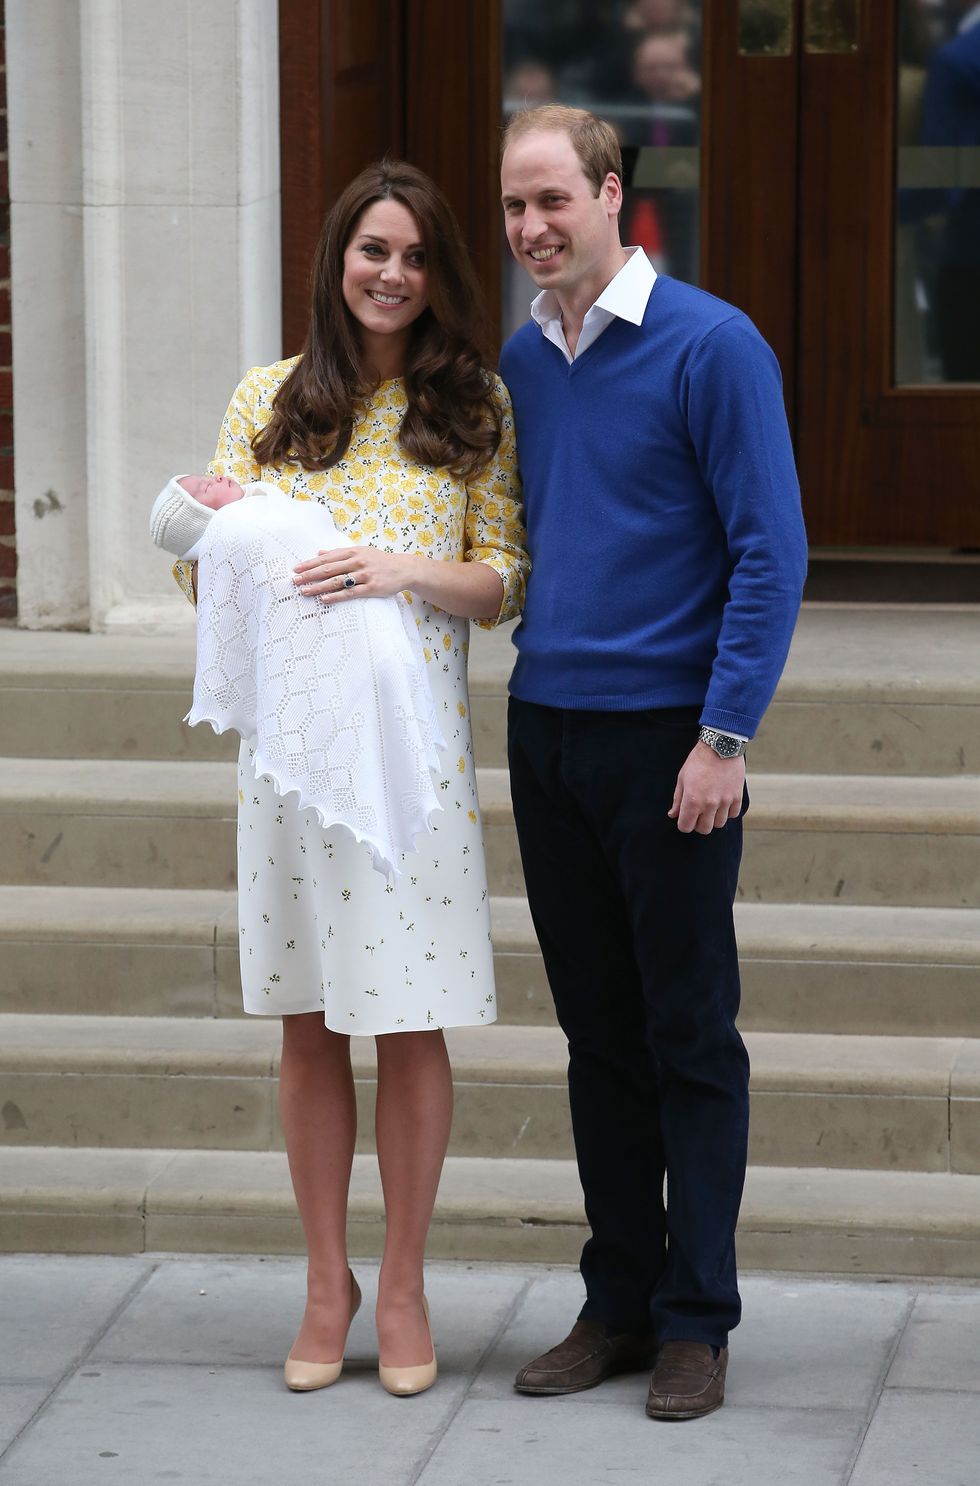 KAte Middleton gives birth to Princess charlotte